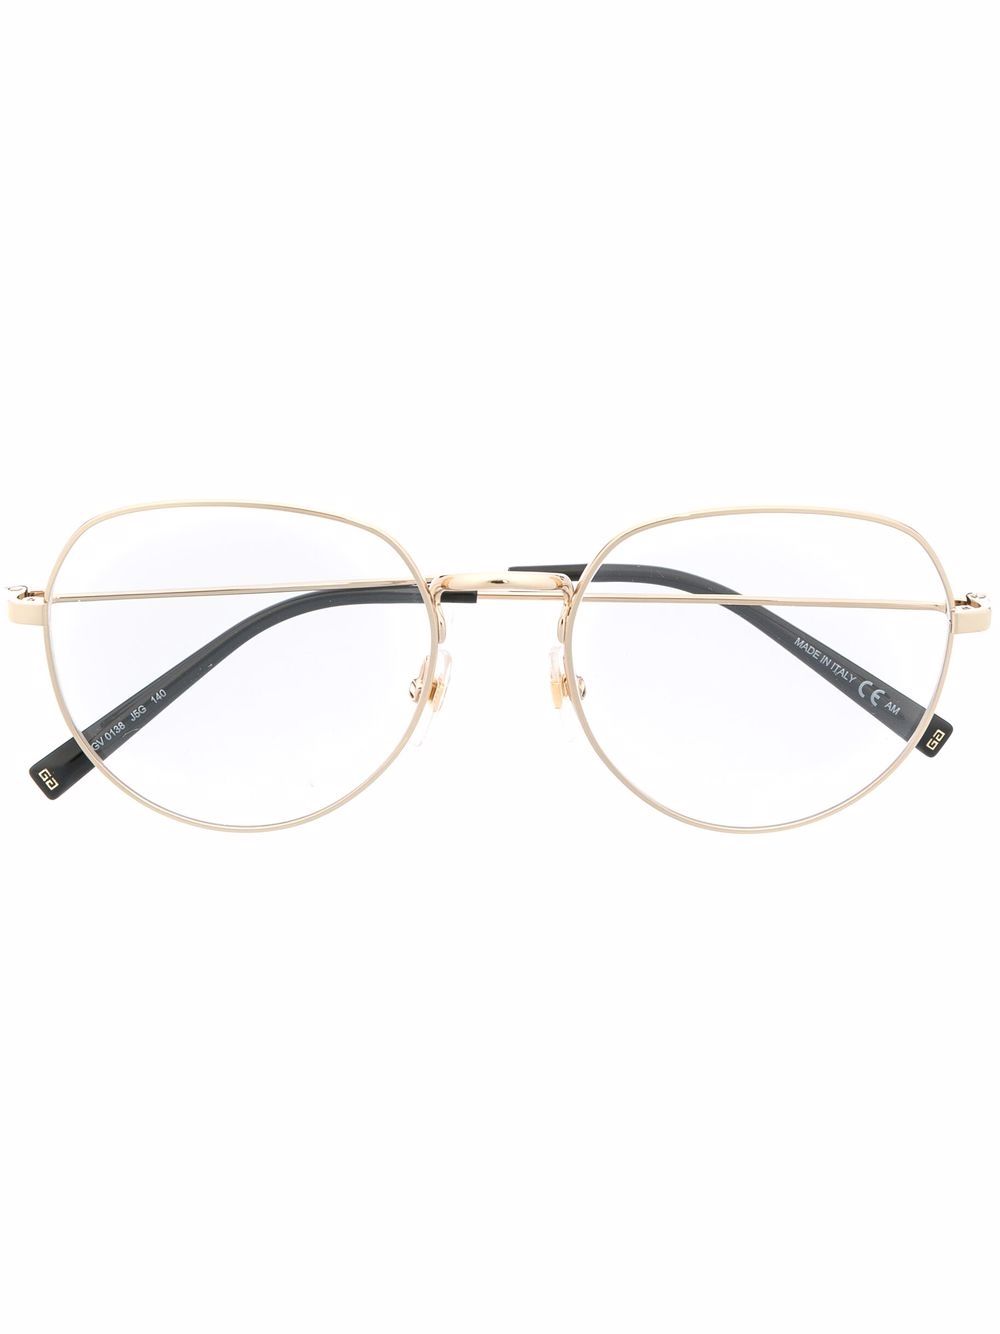 фото Givenchy eyewear очки в тонкой круглой оправе